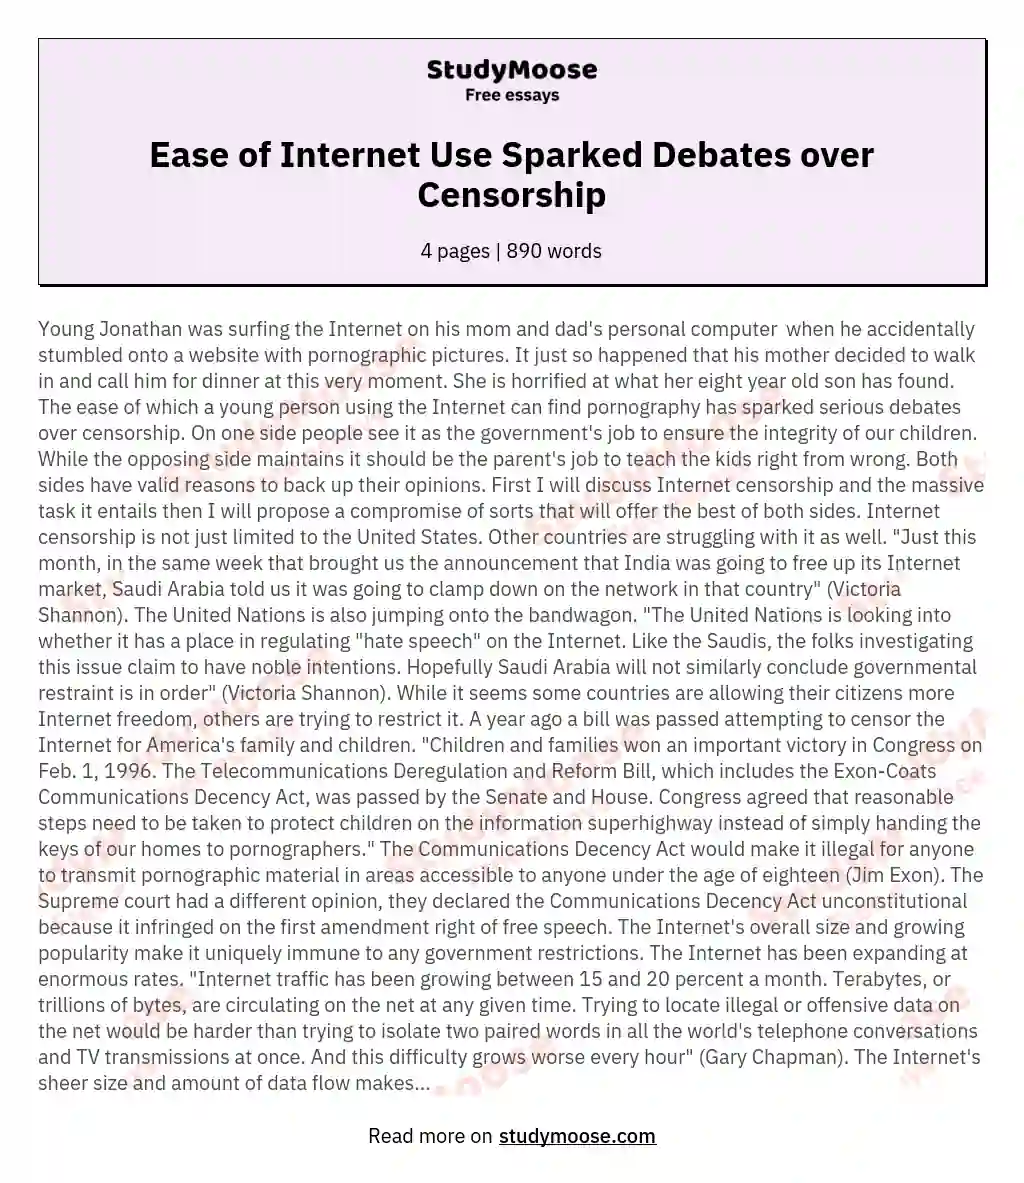 Ease of Internet Use Sparked Debates over Censorship essay